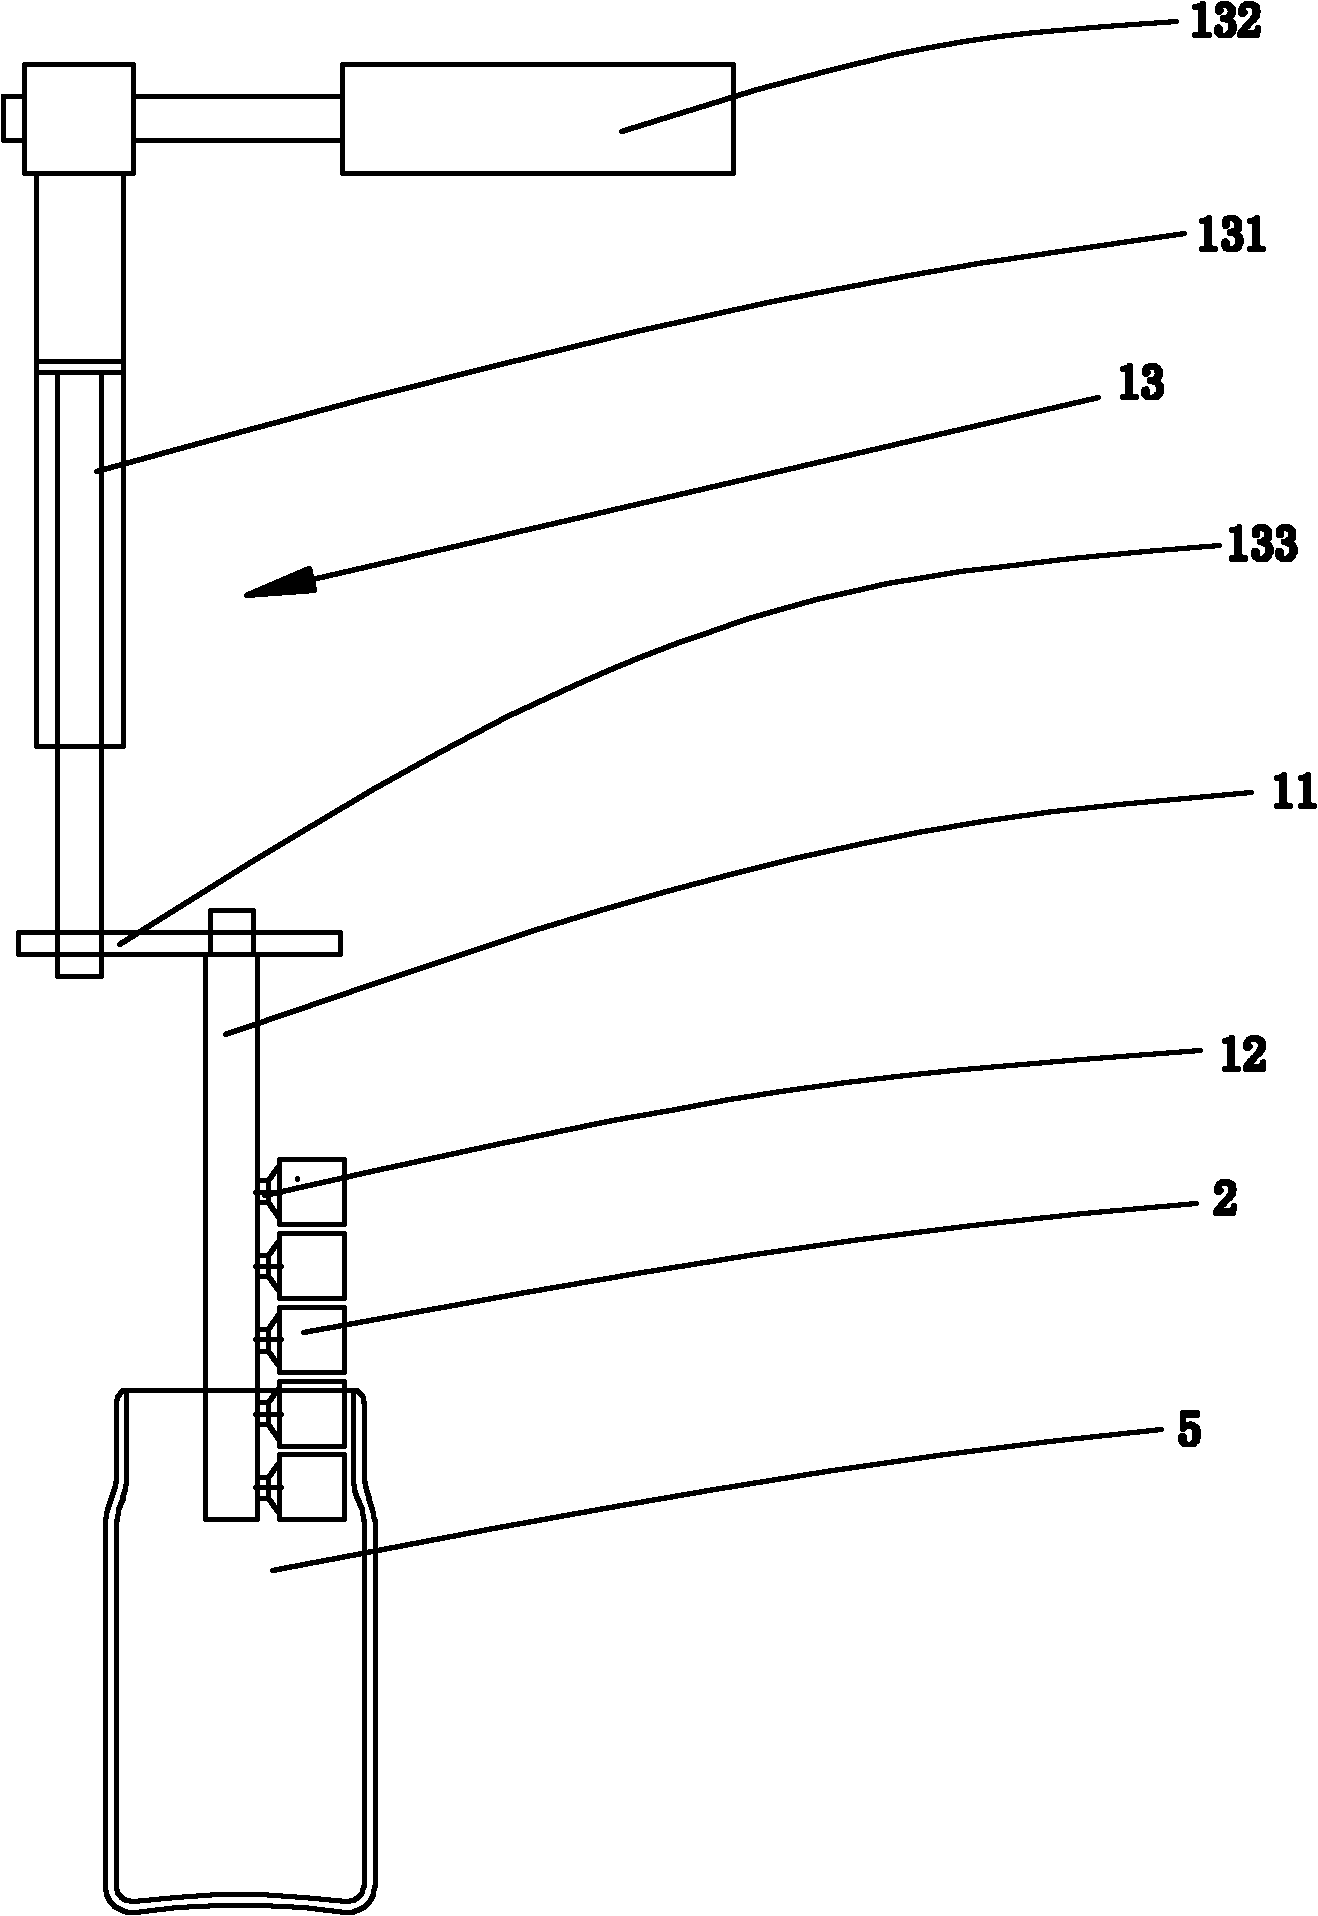 Mechanical arm and fermented beancurd bottling mechanism applying same